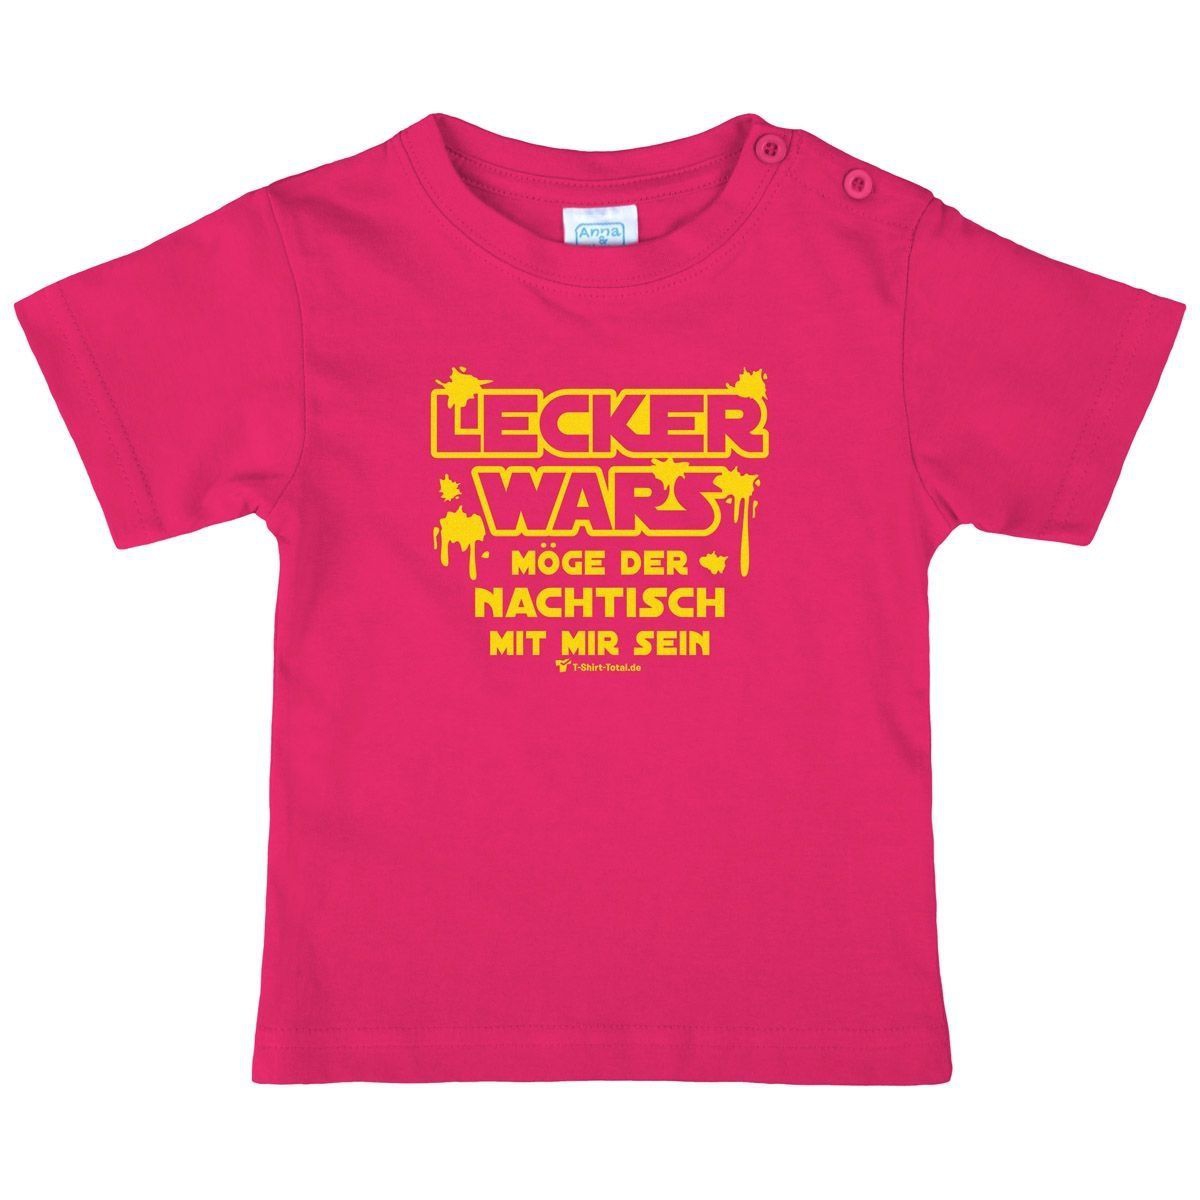 Lecker wars Kinder T-Shirt pink 68 / 74